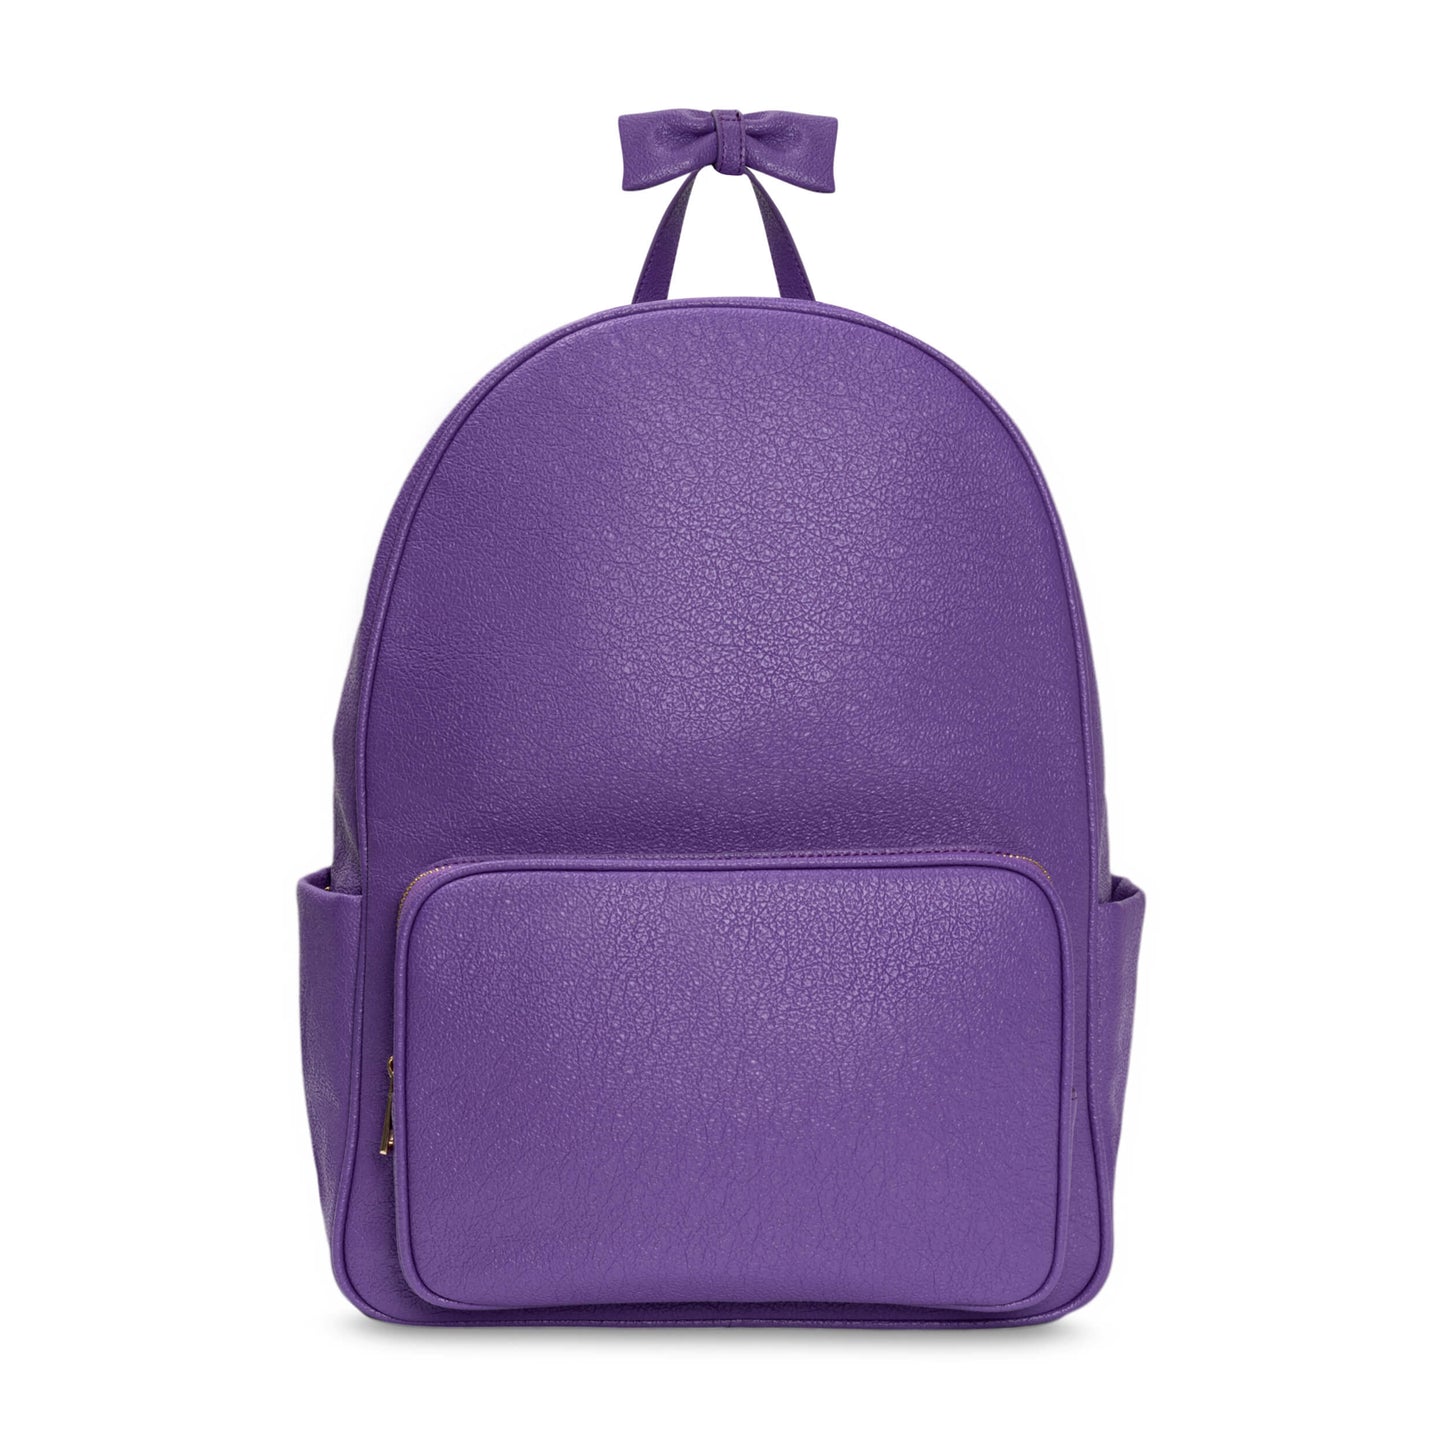 The Taly Backpack - Joyful Purple